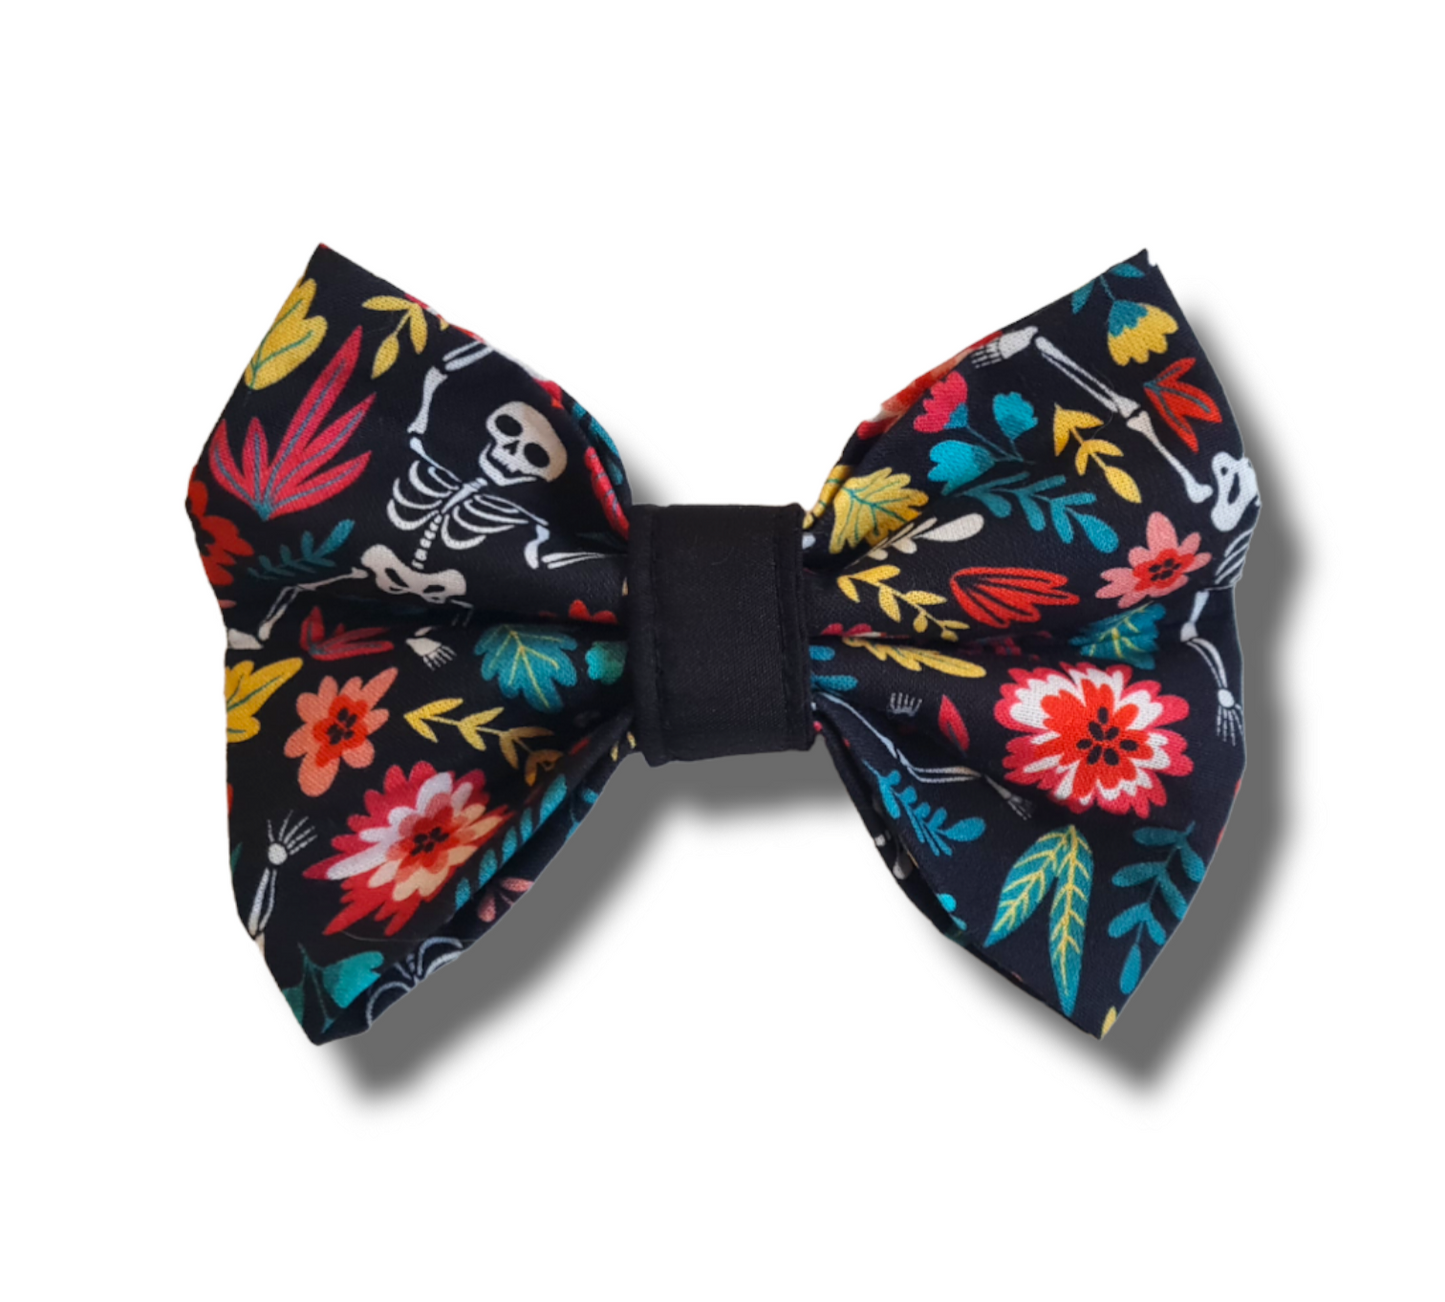 Spooktacular Halloween bow tie